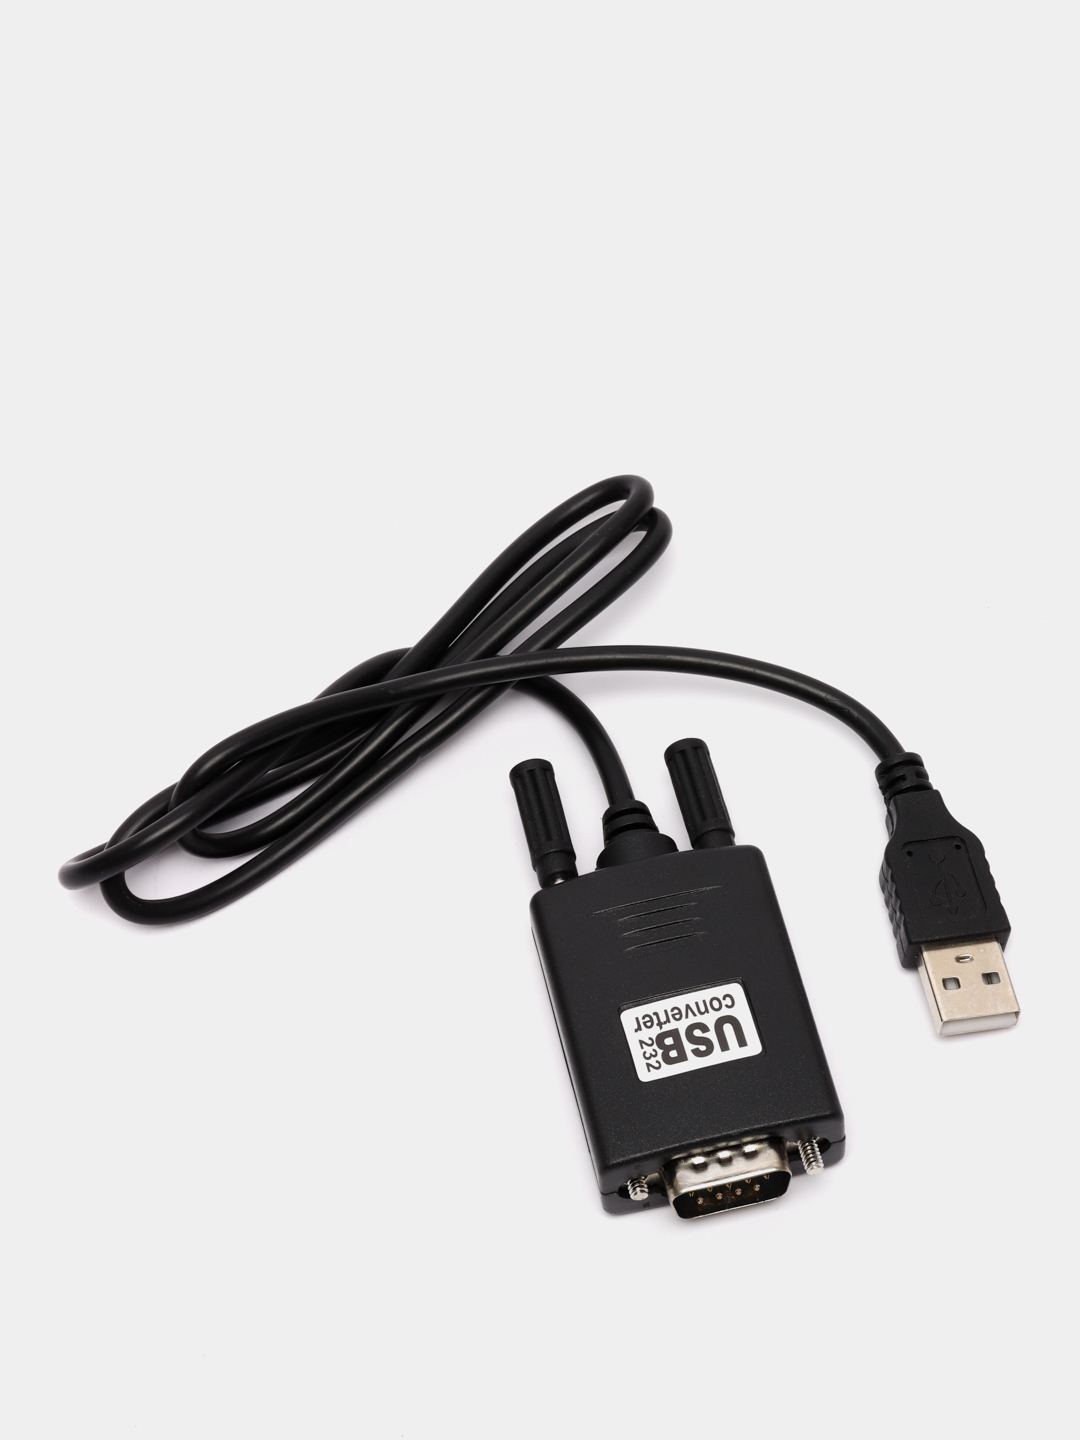 Распиновка RS232 serial to USB converter схема кабеля